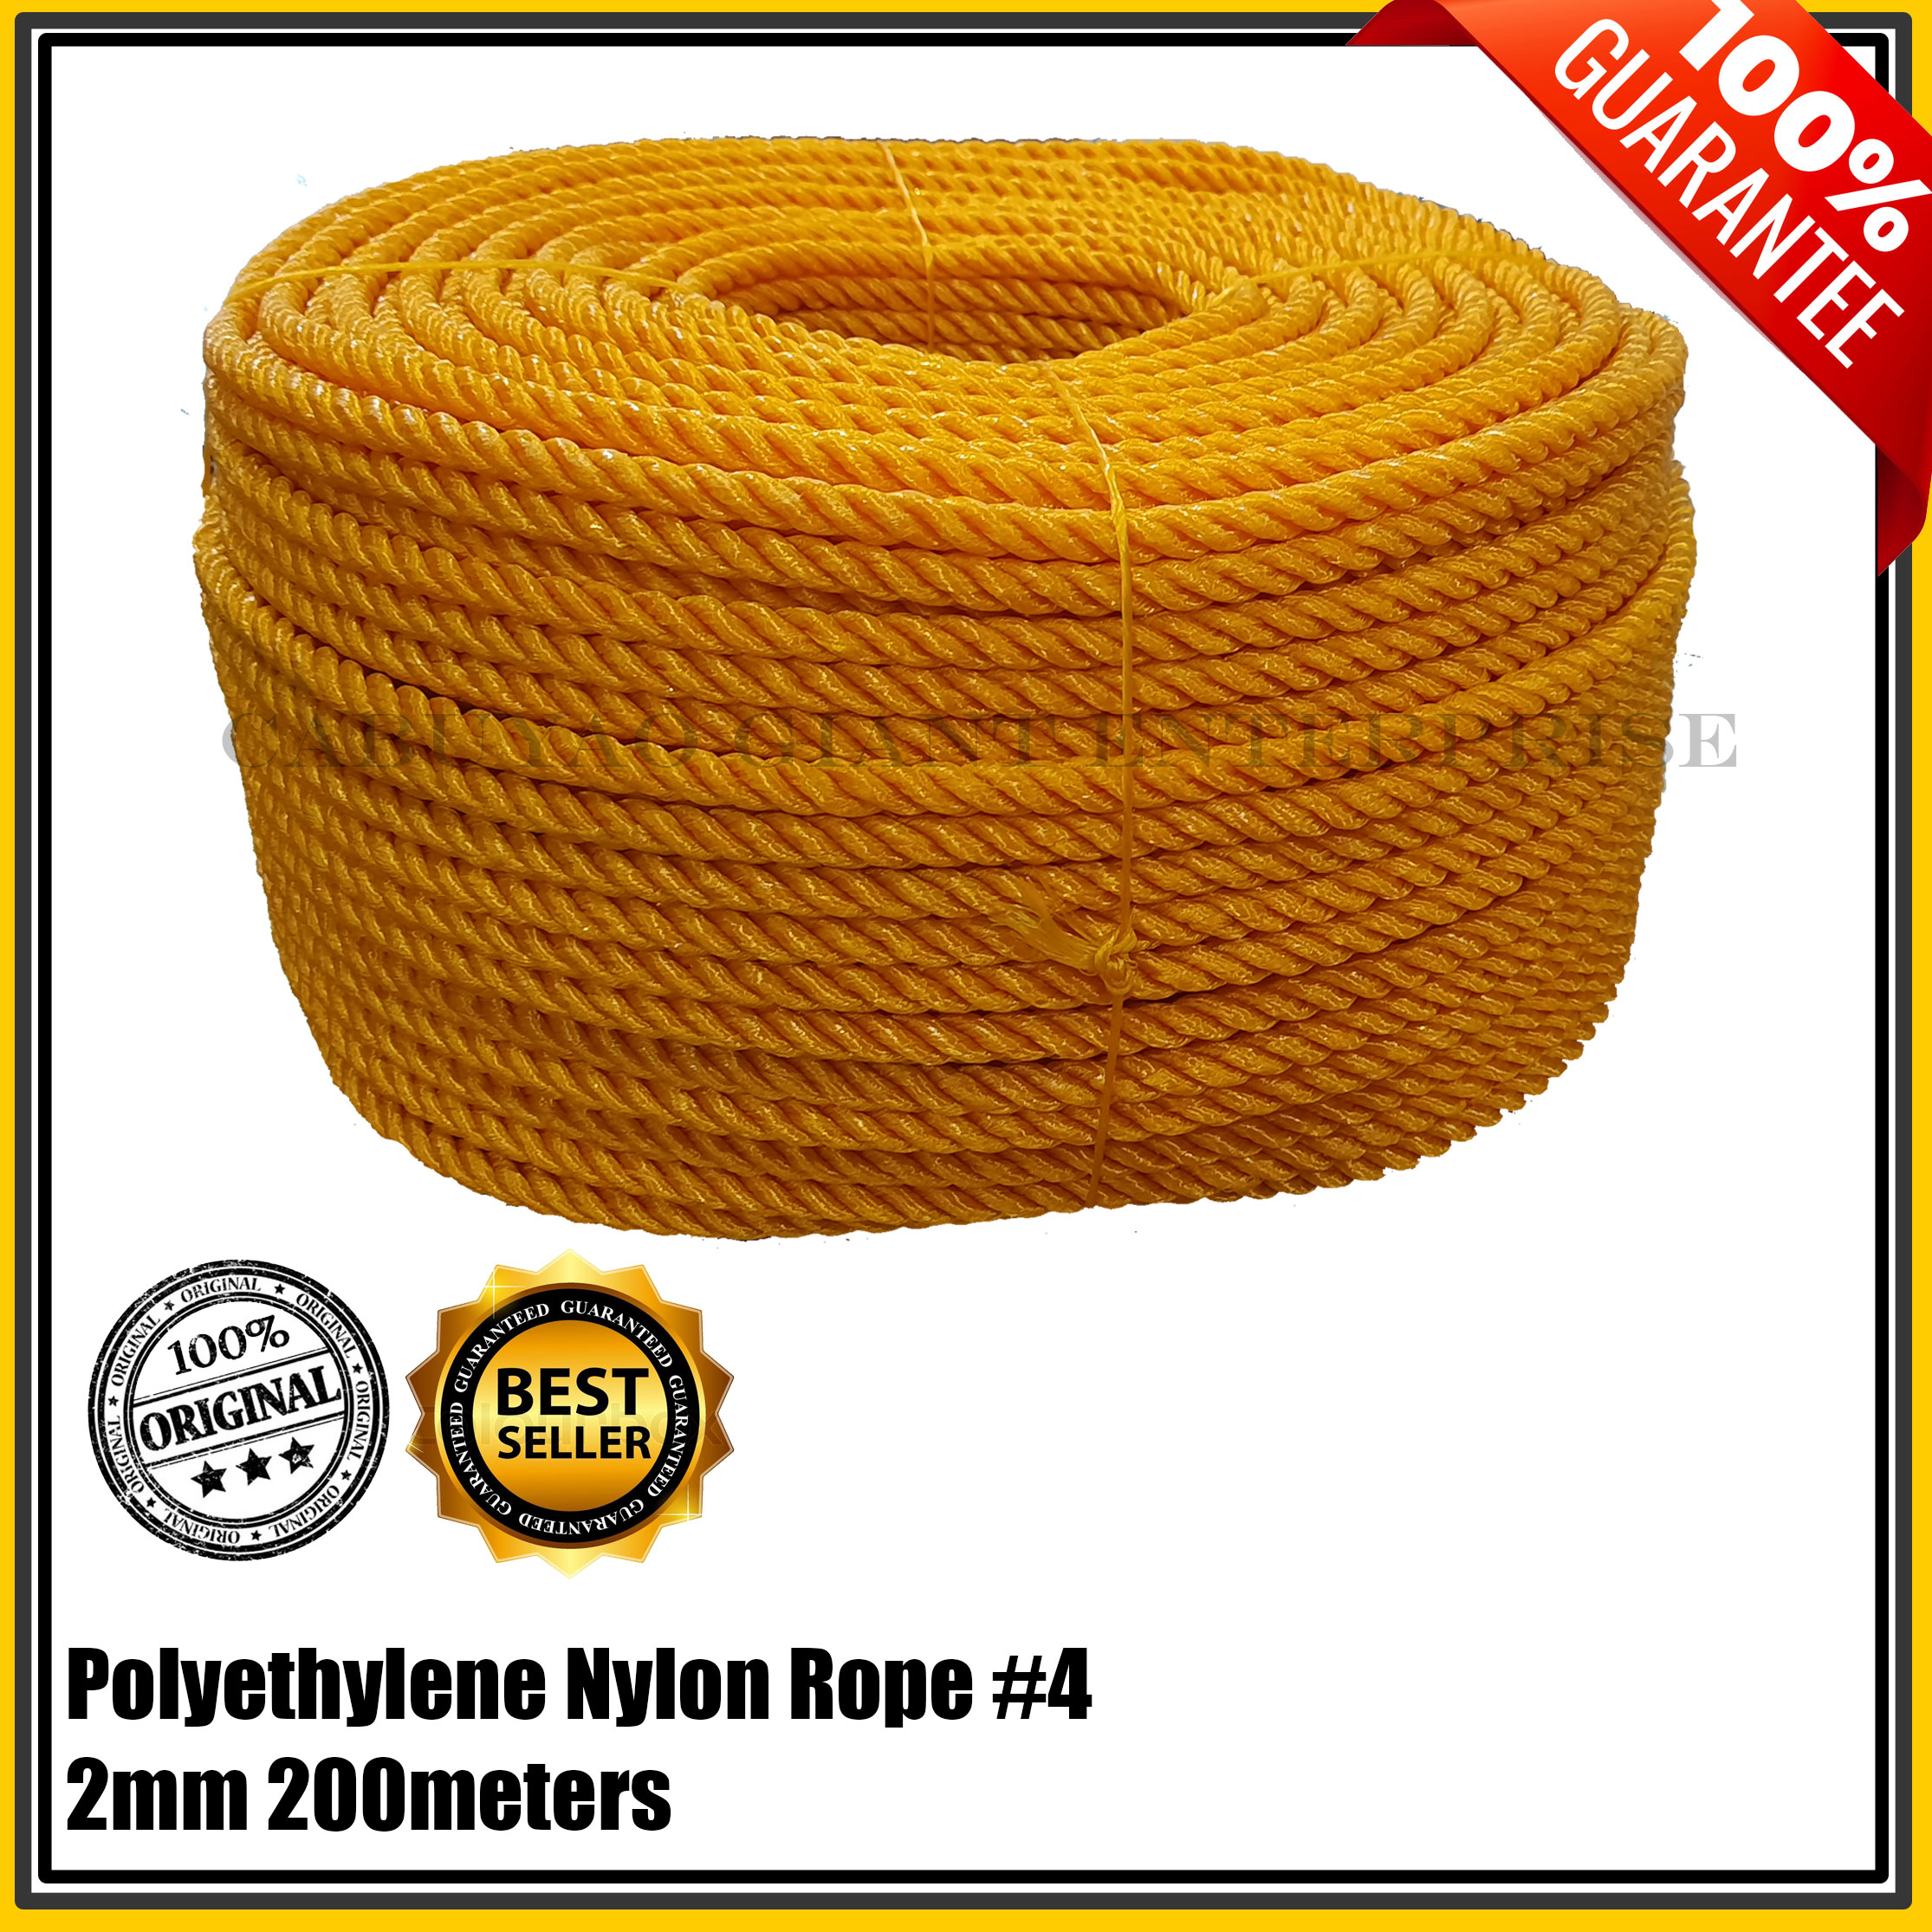 Polyethylene Nylon Rope #4 (2mm) 200meters long